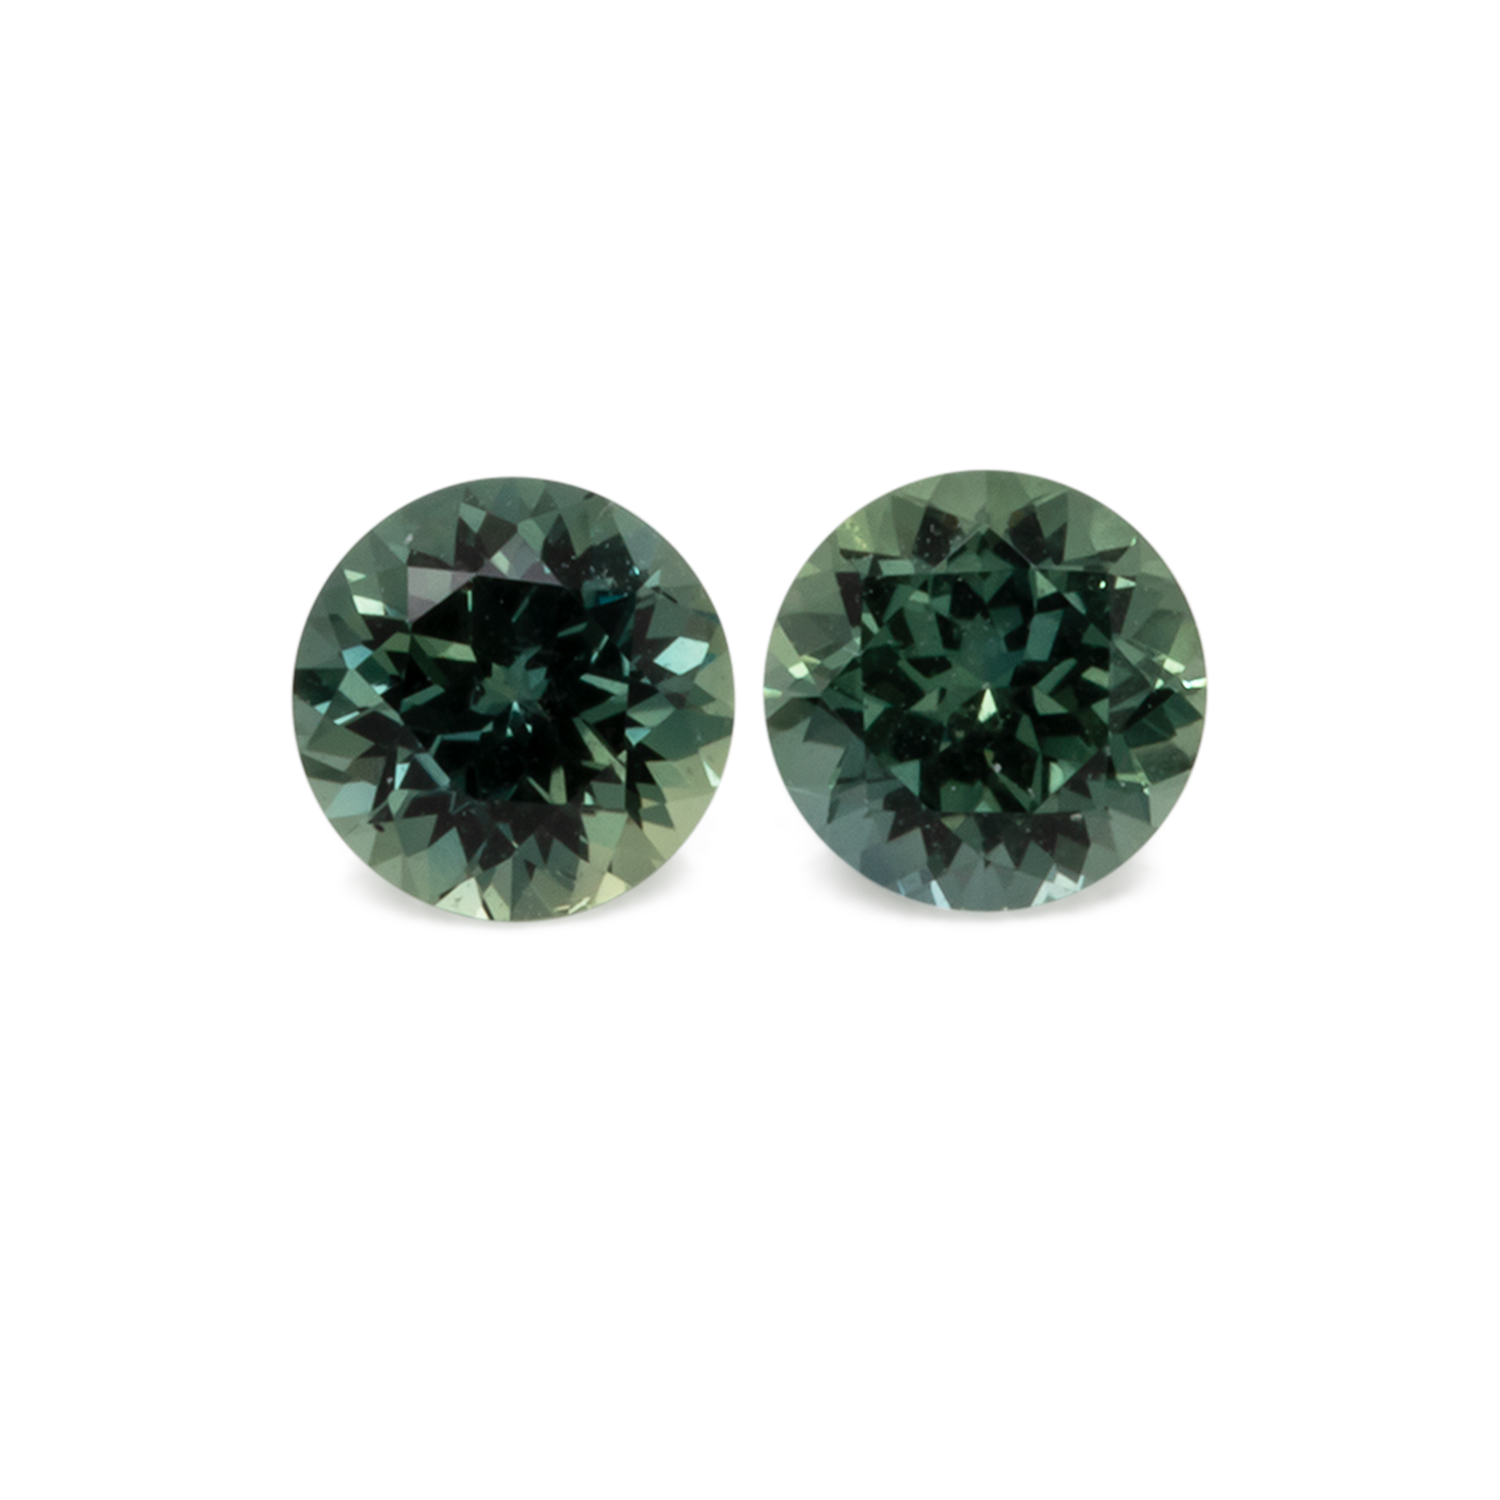 Saphir Paar - blau/grün, rund, 4x4 mm, 0,64 cts, Nr. XSR11200